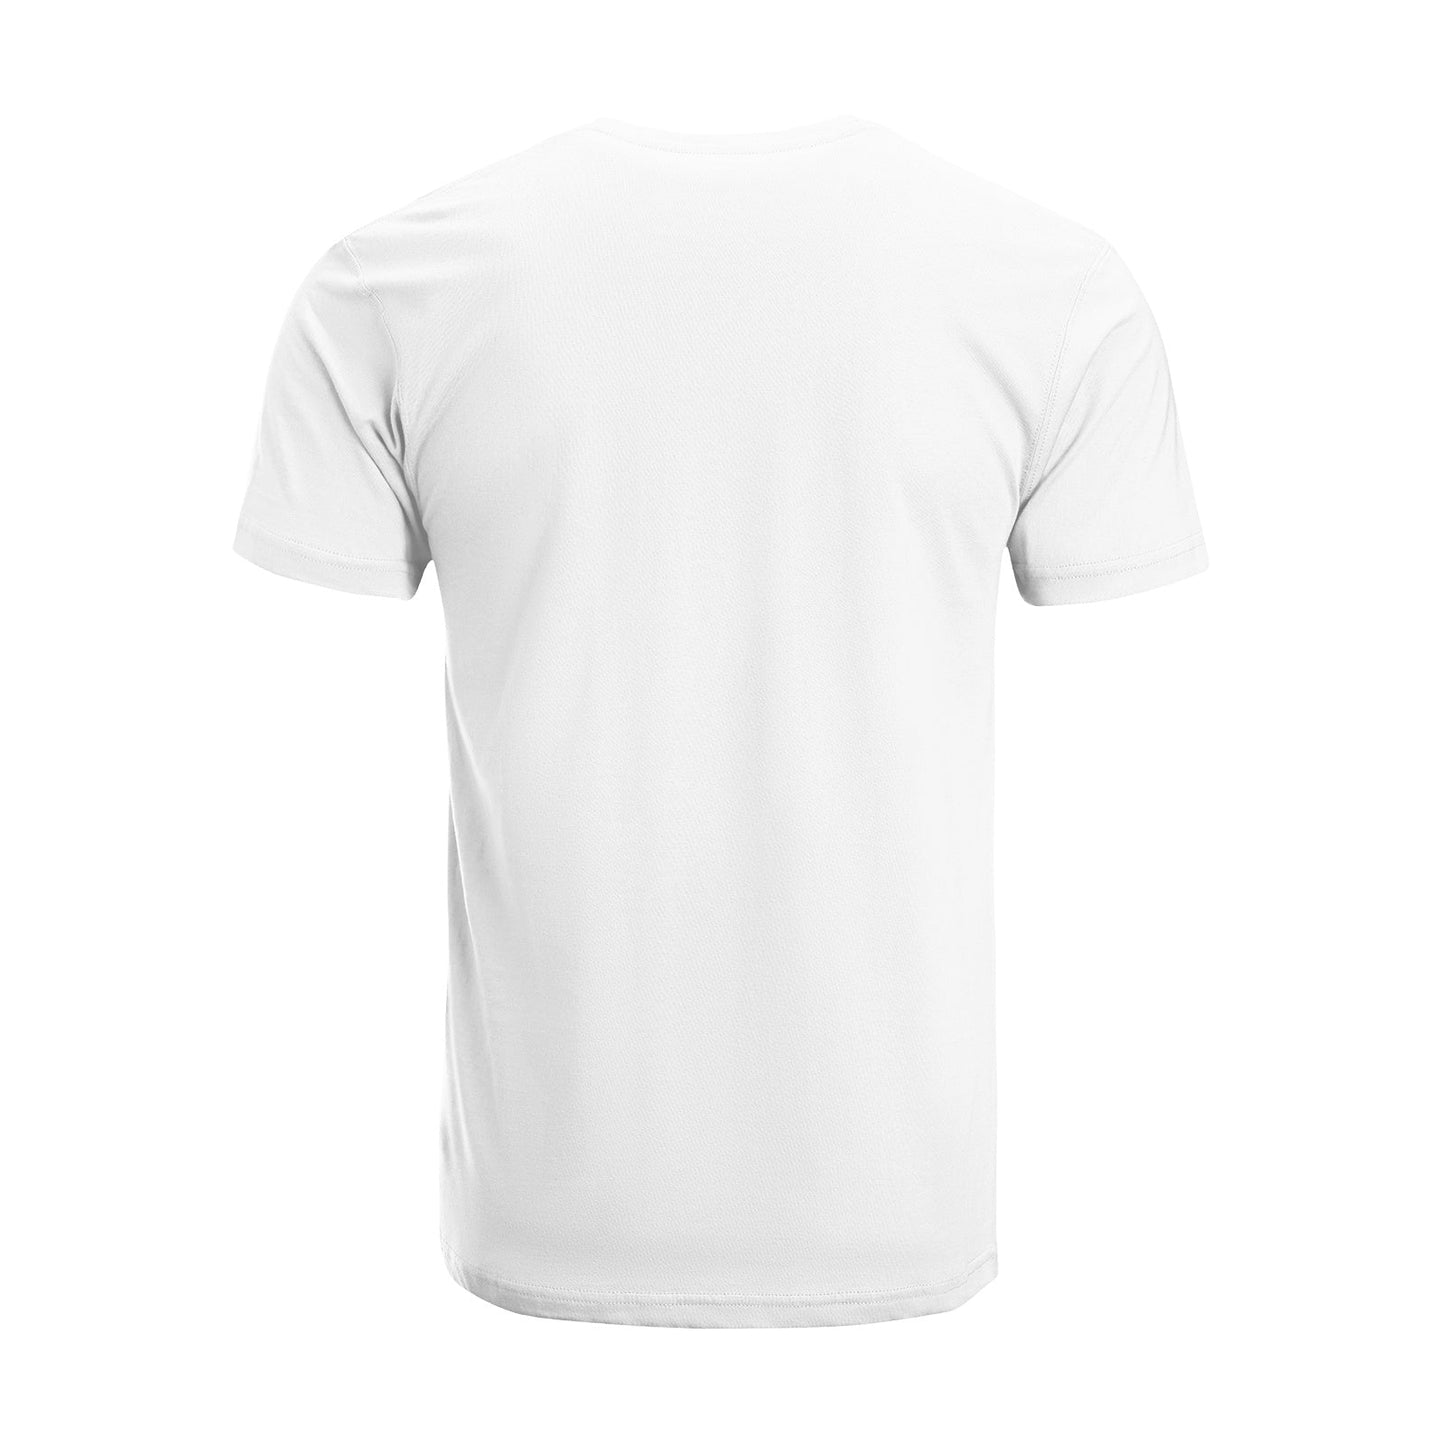 Unisex Short Sleeve Crew Neck Cotton Jersey T-Shirt CAT 42 - Tara-Outfits.com